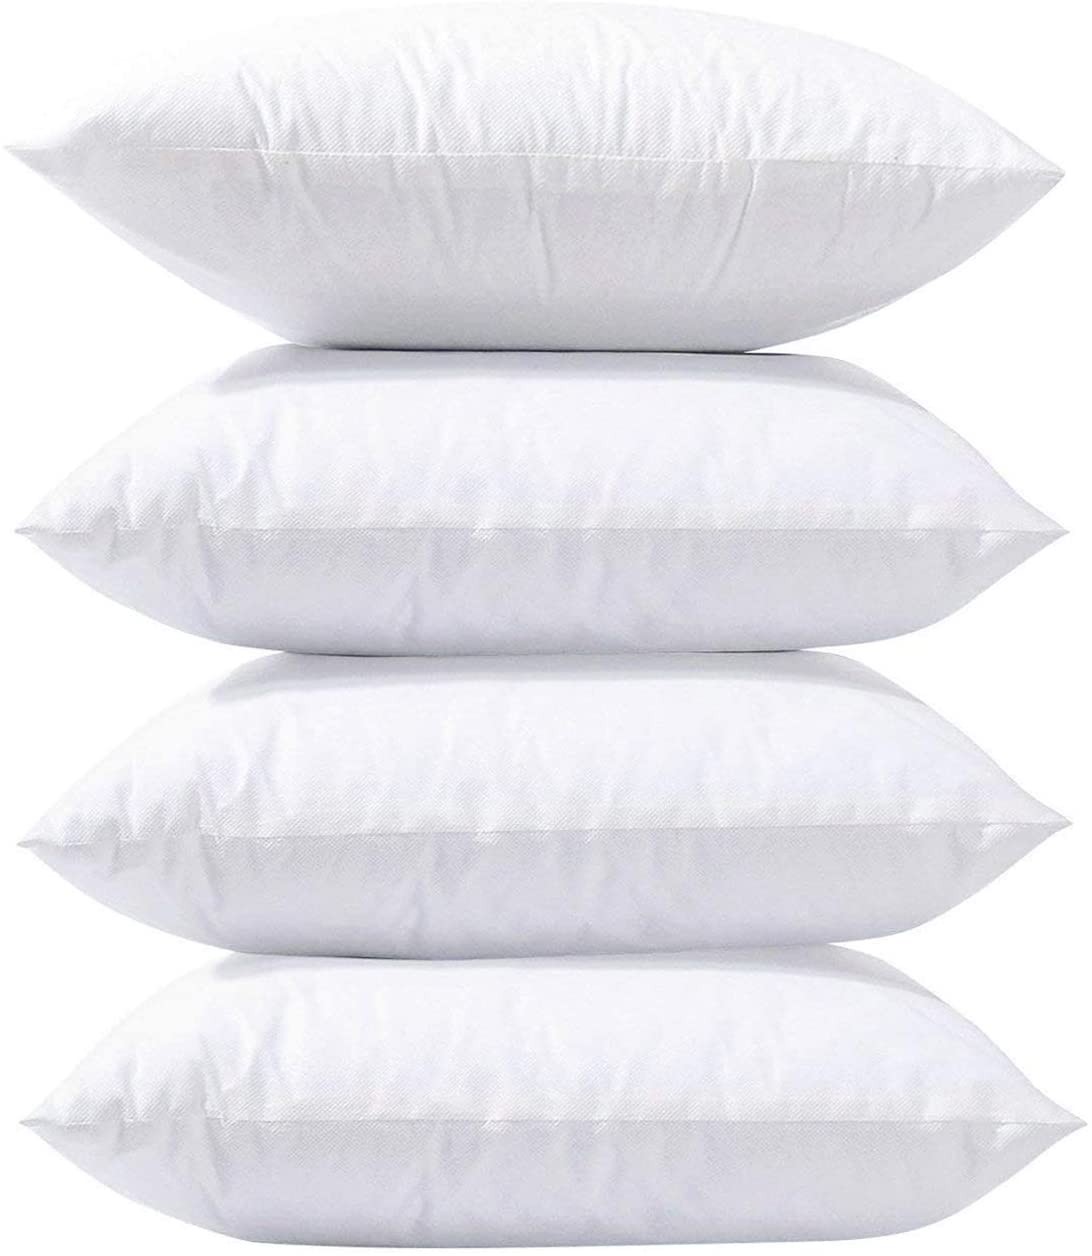 Pillowflex Pillow Form Insert - Machine Washable (12 Inch By 18